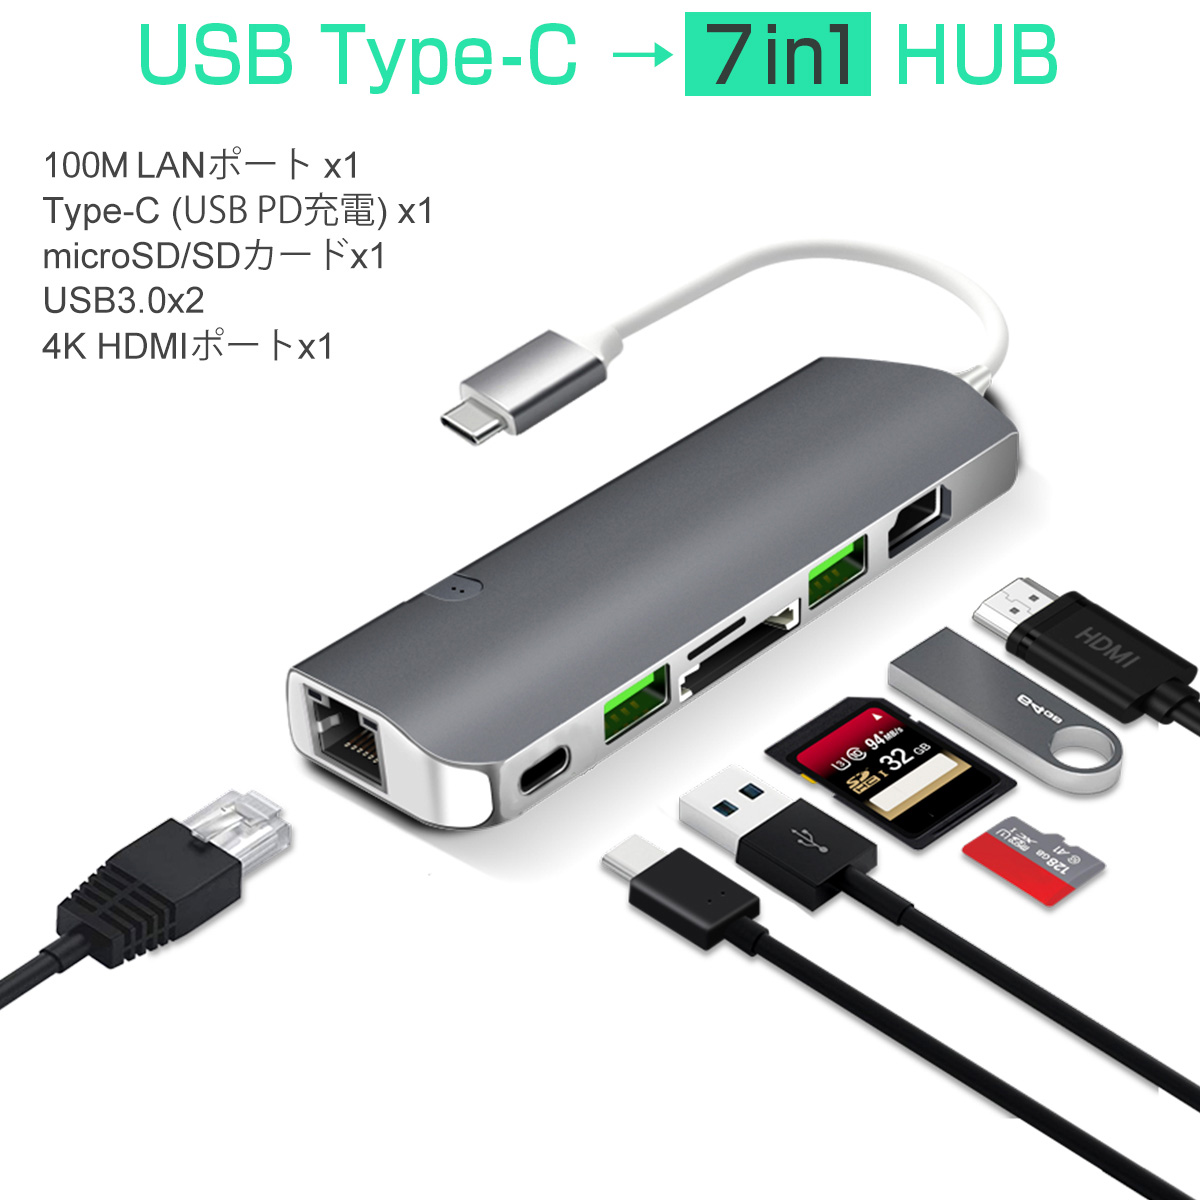 SDL USB Type-C ハブ 7in1 USB3.0x2 4K HDMI 1Gbps有線LAN PD充電 microSD SDスロット 変換 拡張 Windows対応 は自分にプチご褒美を VAIO Mac ChromeBook スペースグレイ 3ヶ月保証 MacBook Galaxy 軽量 上等な